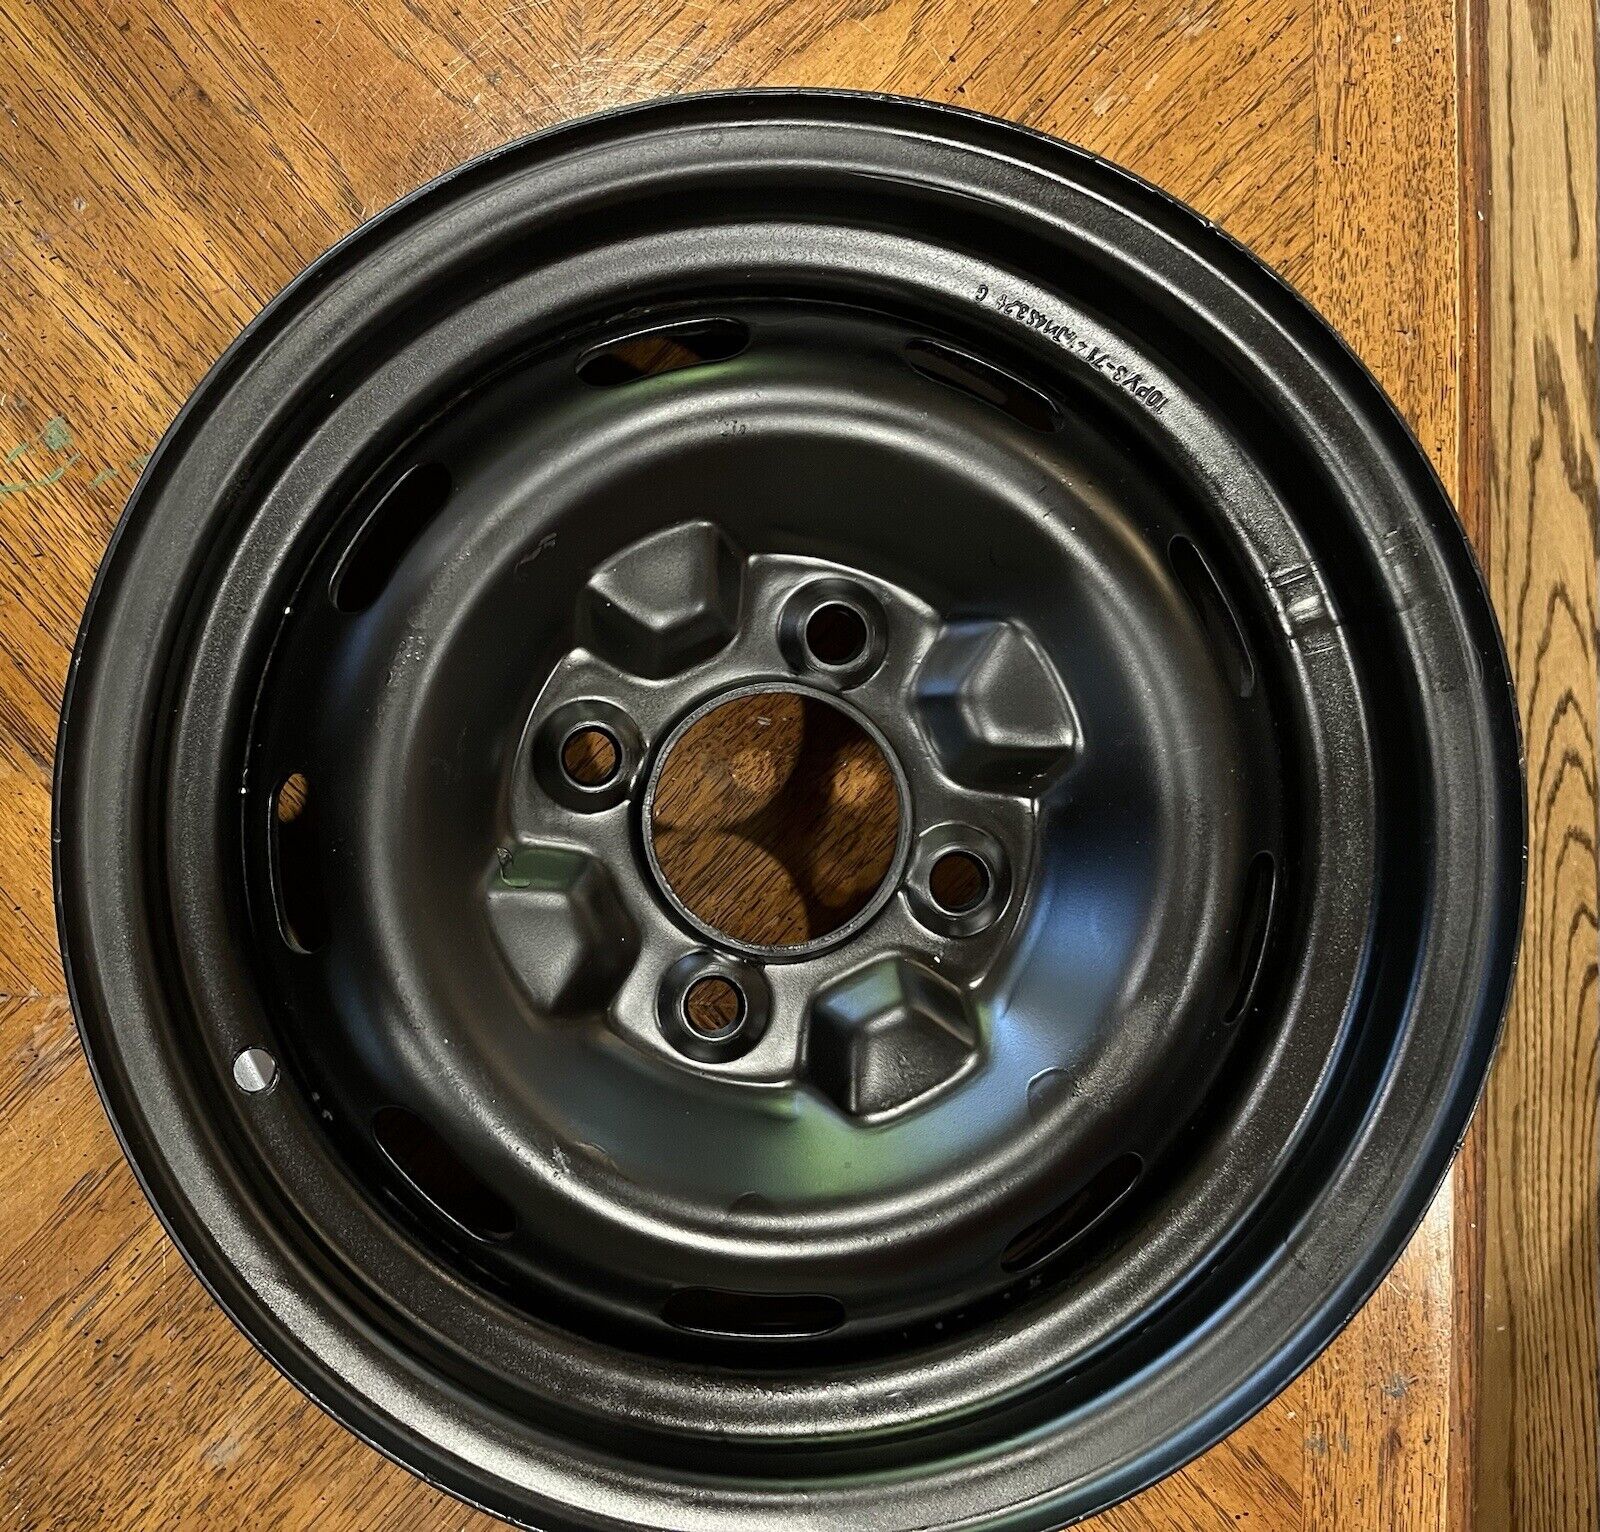 Datsun 240Z TOPY steel wheel rim 12/70-14” X 4.5”. Restored